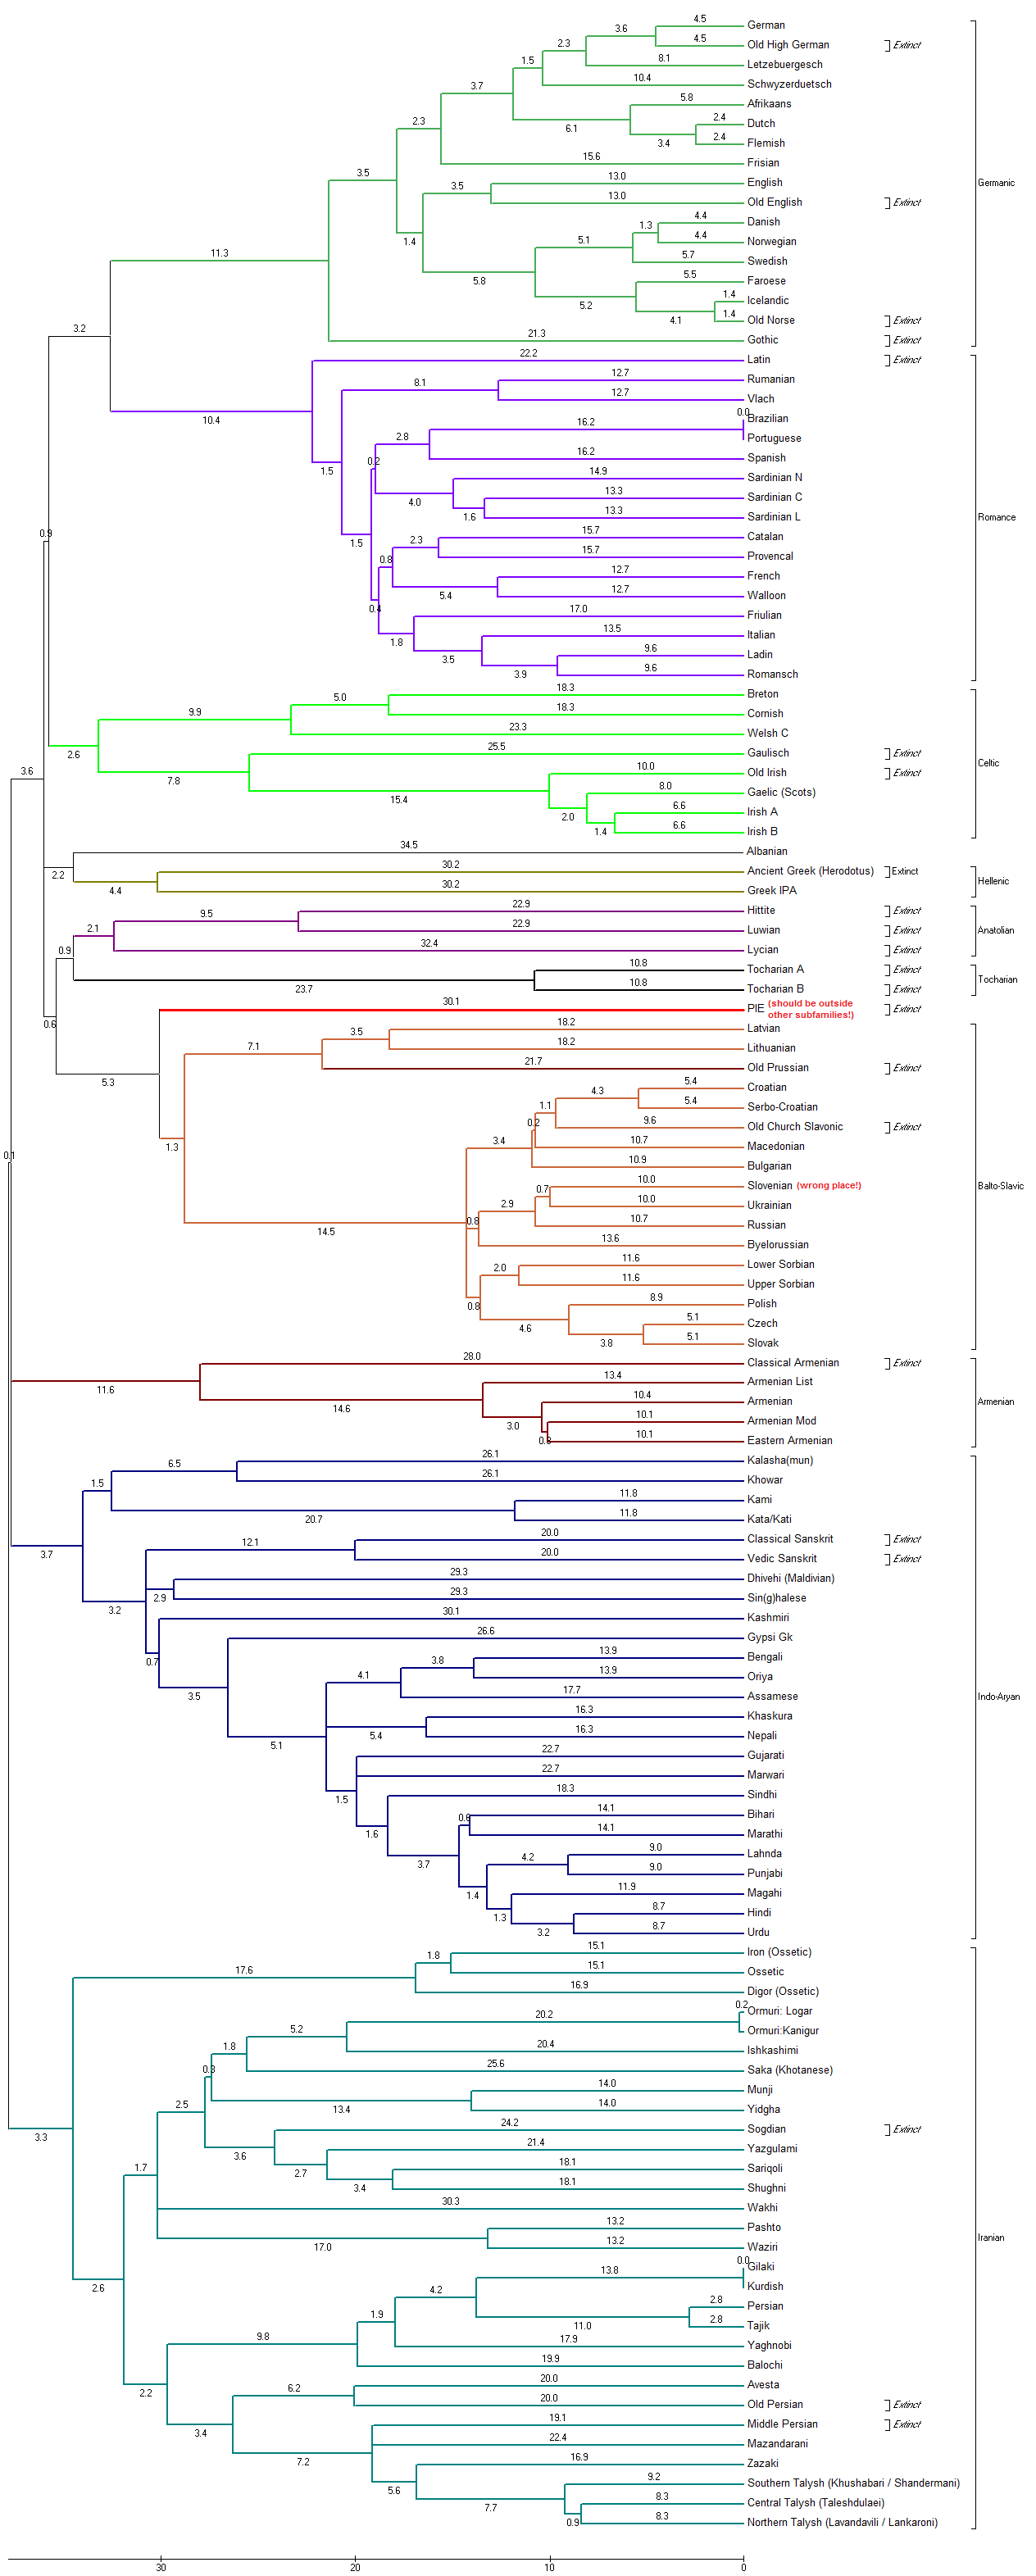 Indo-European evolutionary tree